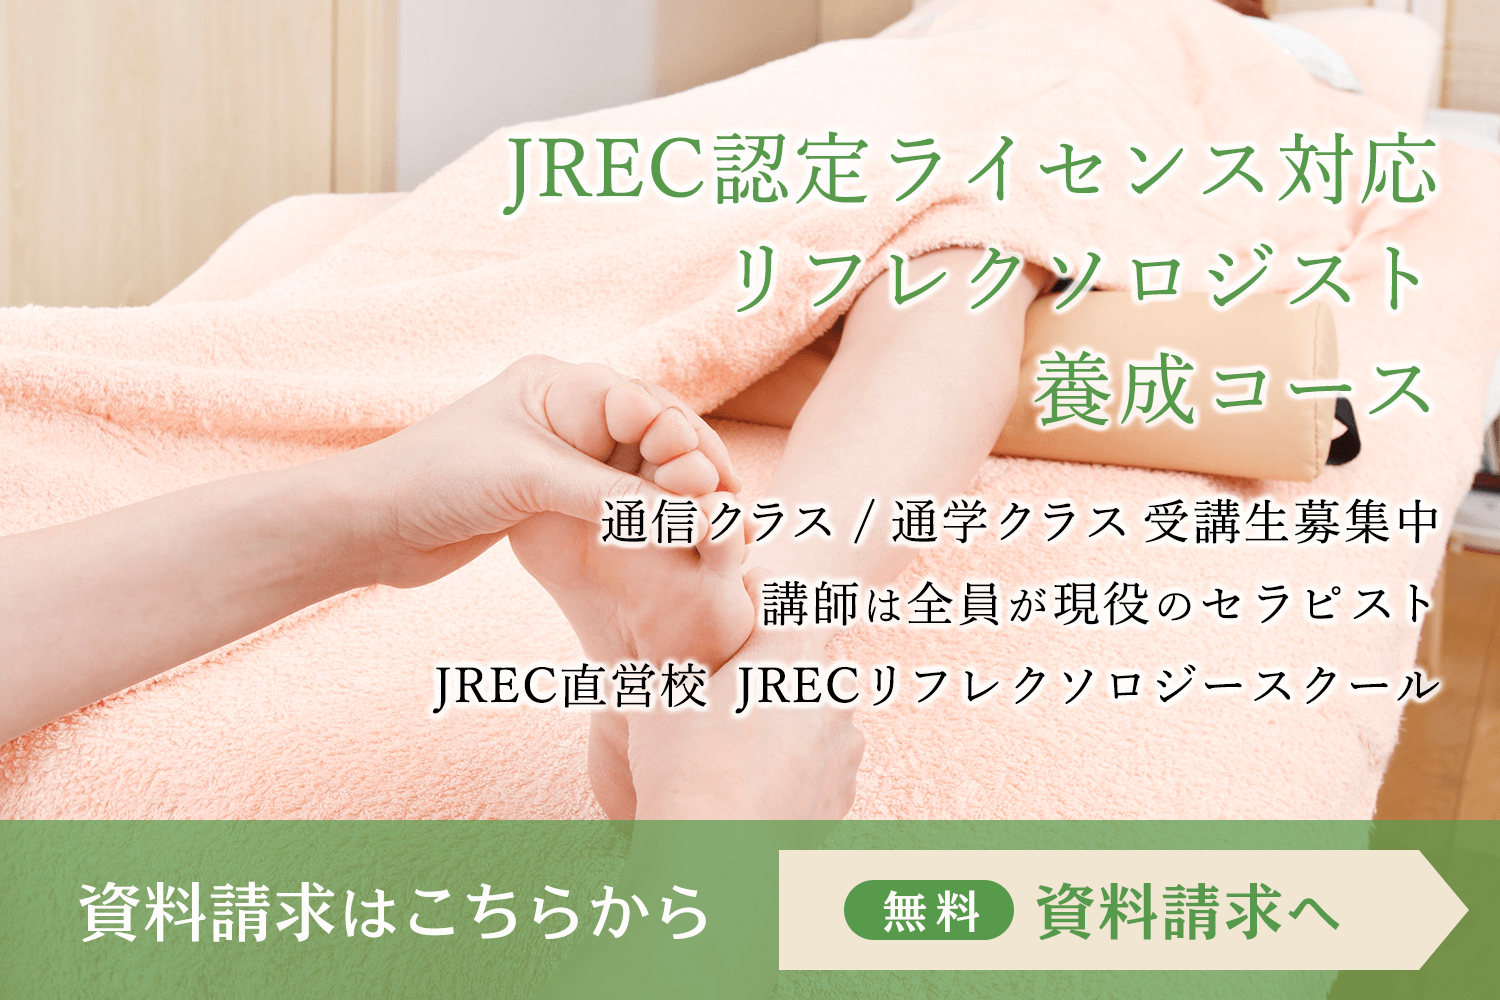 Jrec 日本リフレクソロジスト認定機構